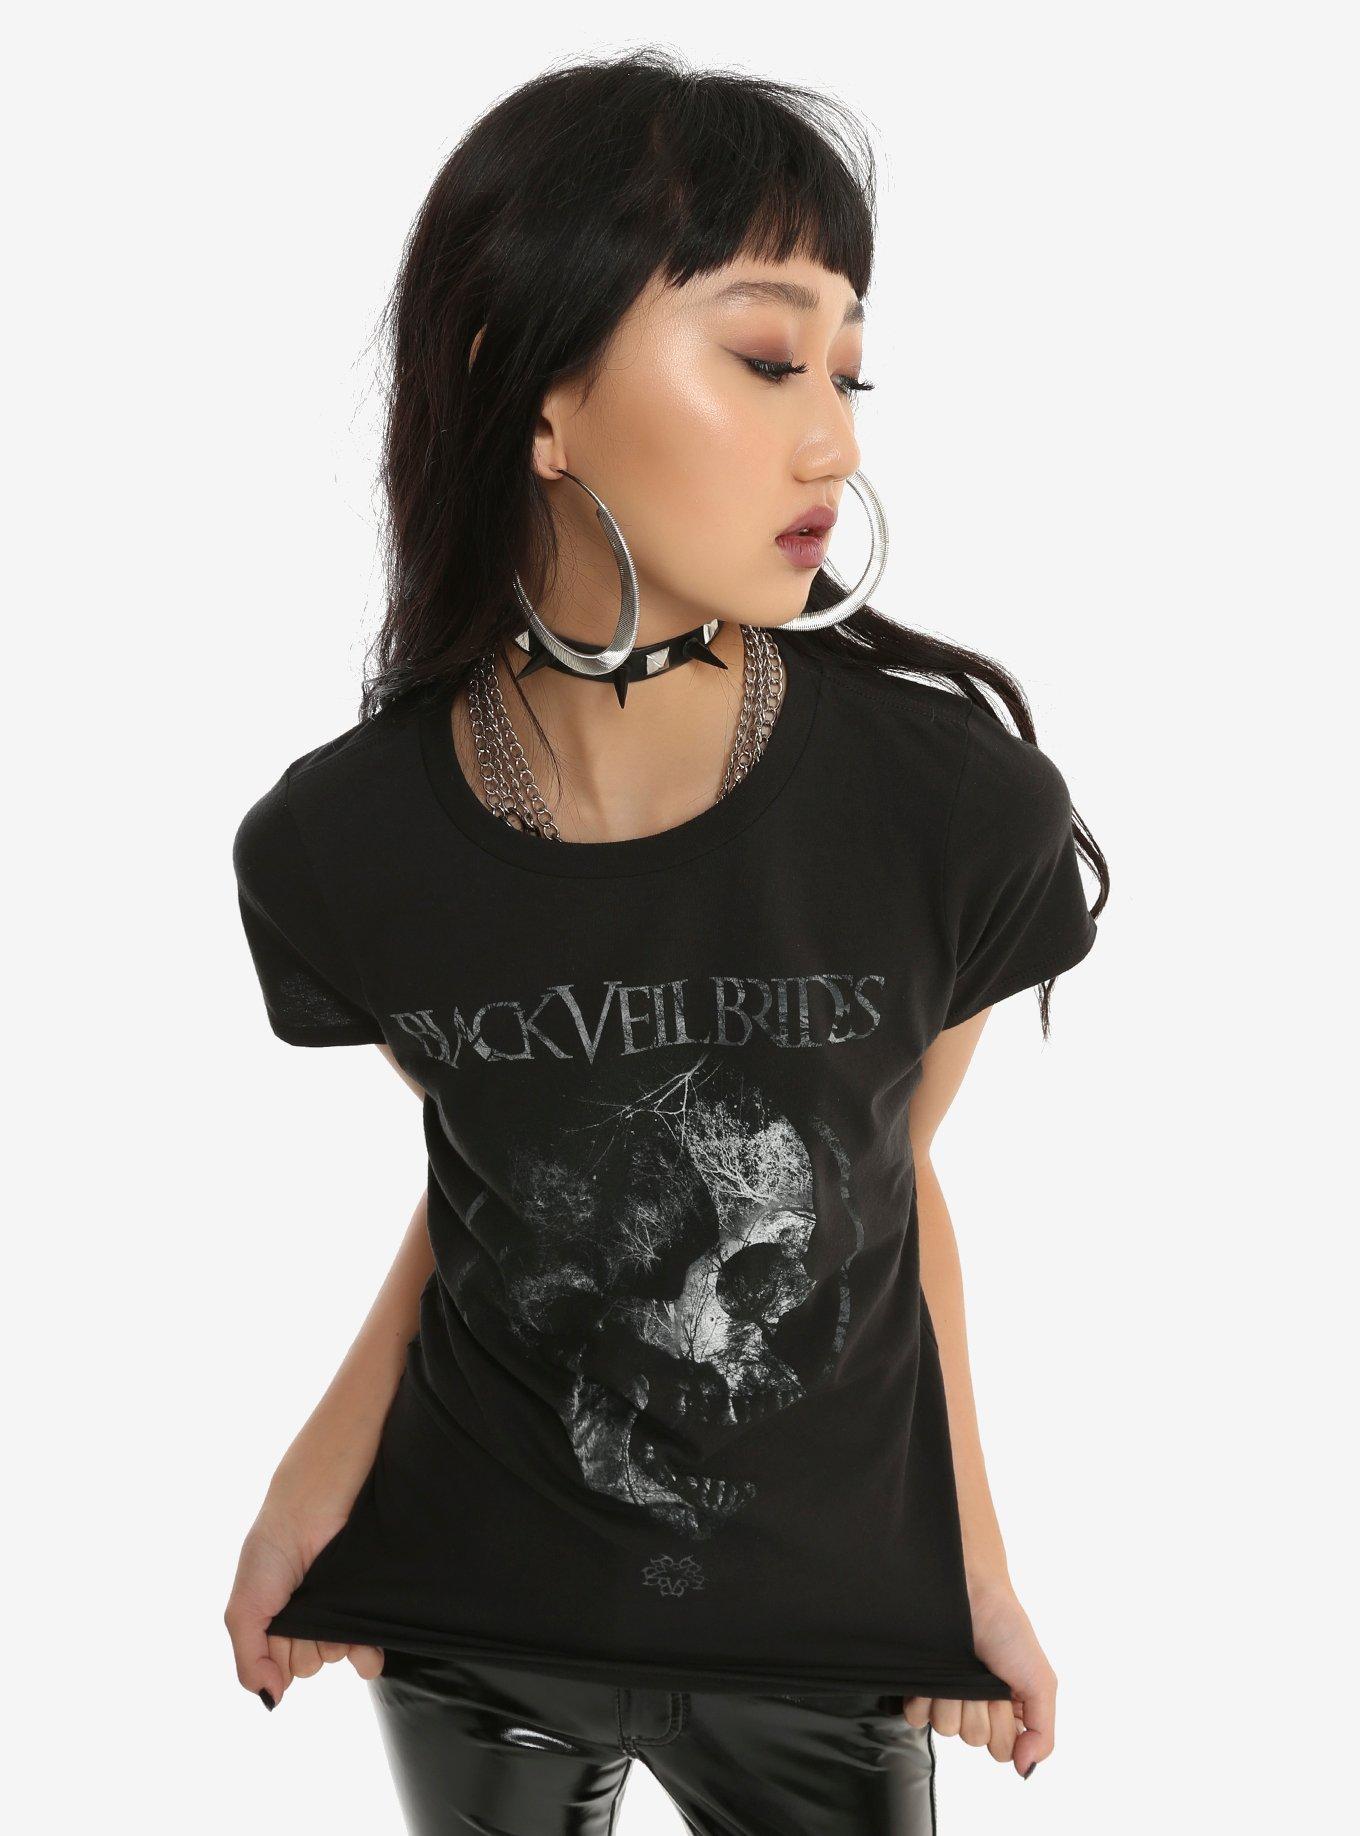 Black Veil Brides Skull Girls T-Shirt, BLACK, hi-res